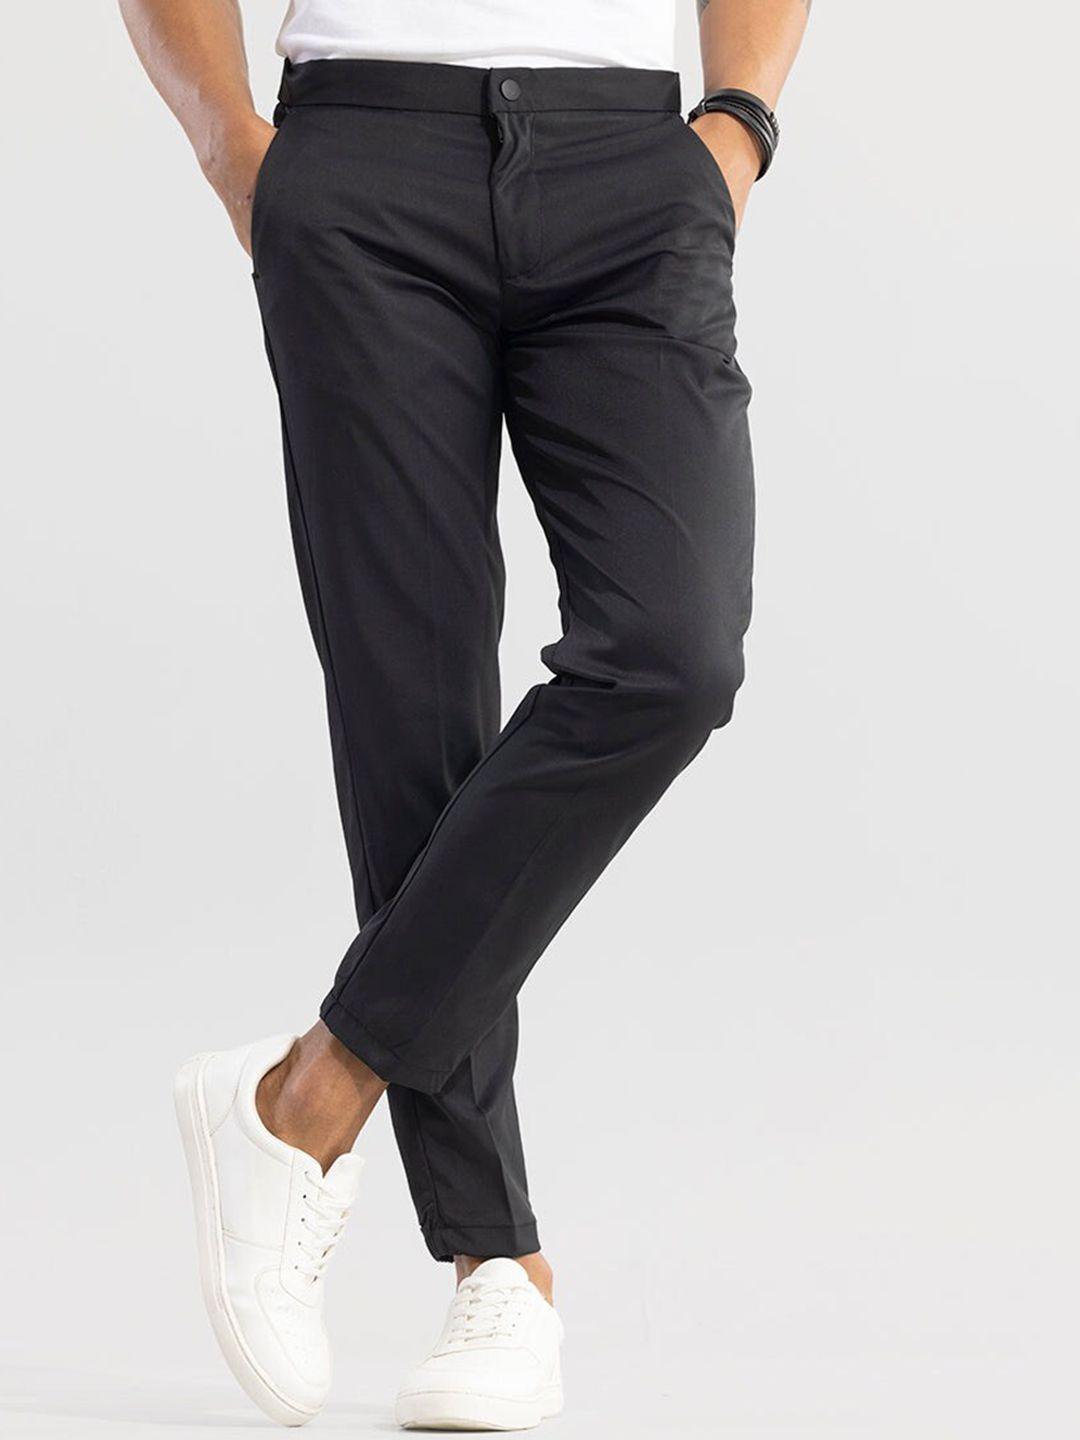 snitch-men-black-smart-slim-fit-cotton-chinos-trousers